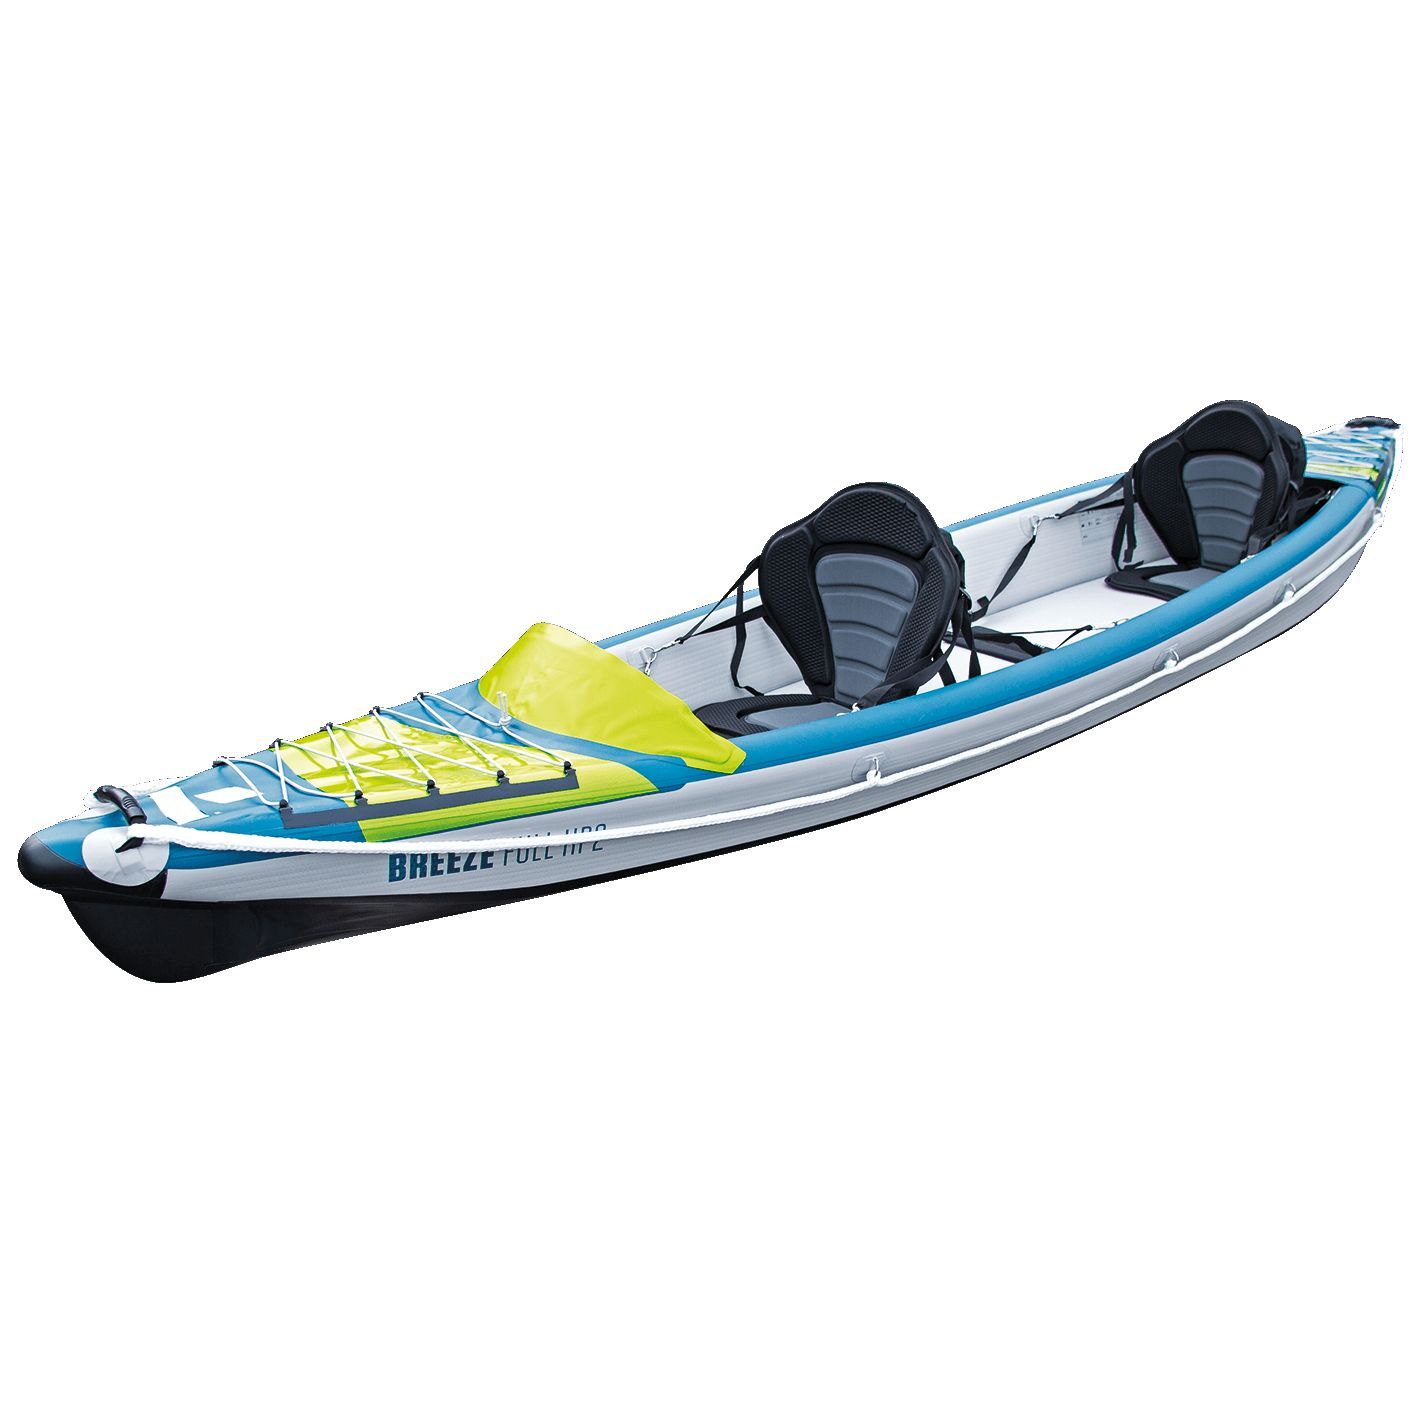 Tahe Outdoor Kayak Air Breeze Full Hp2 - aufblasbares Kajak